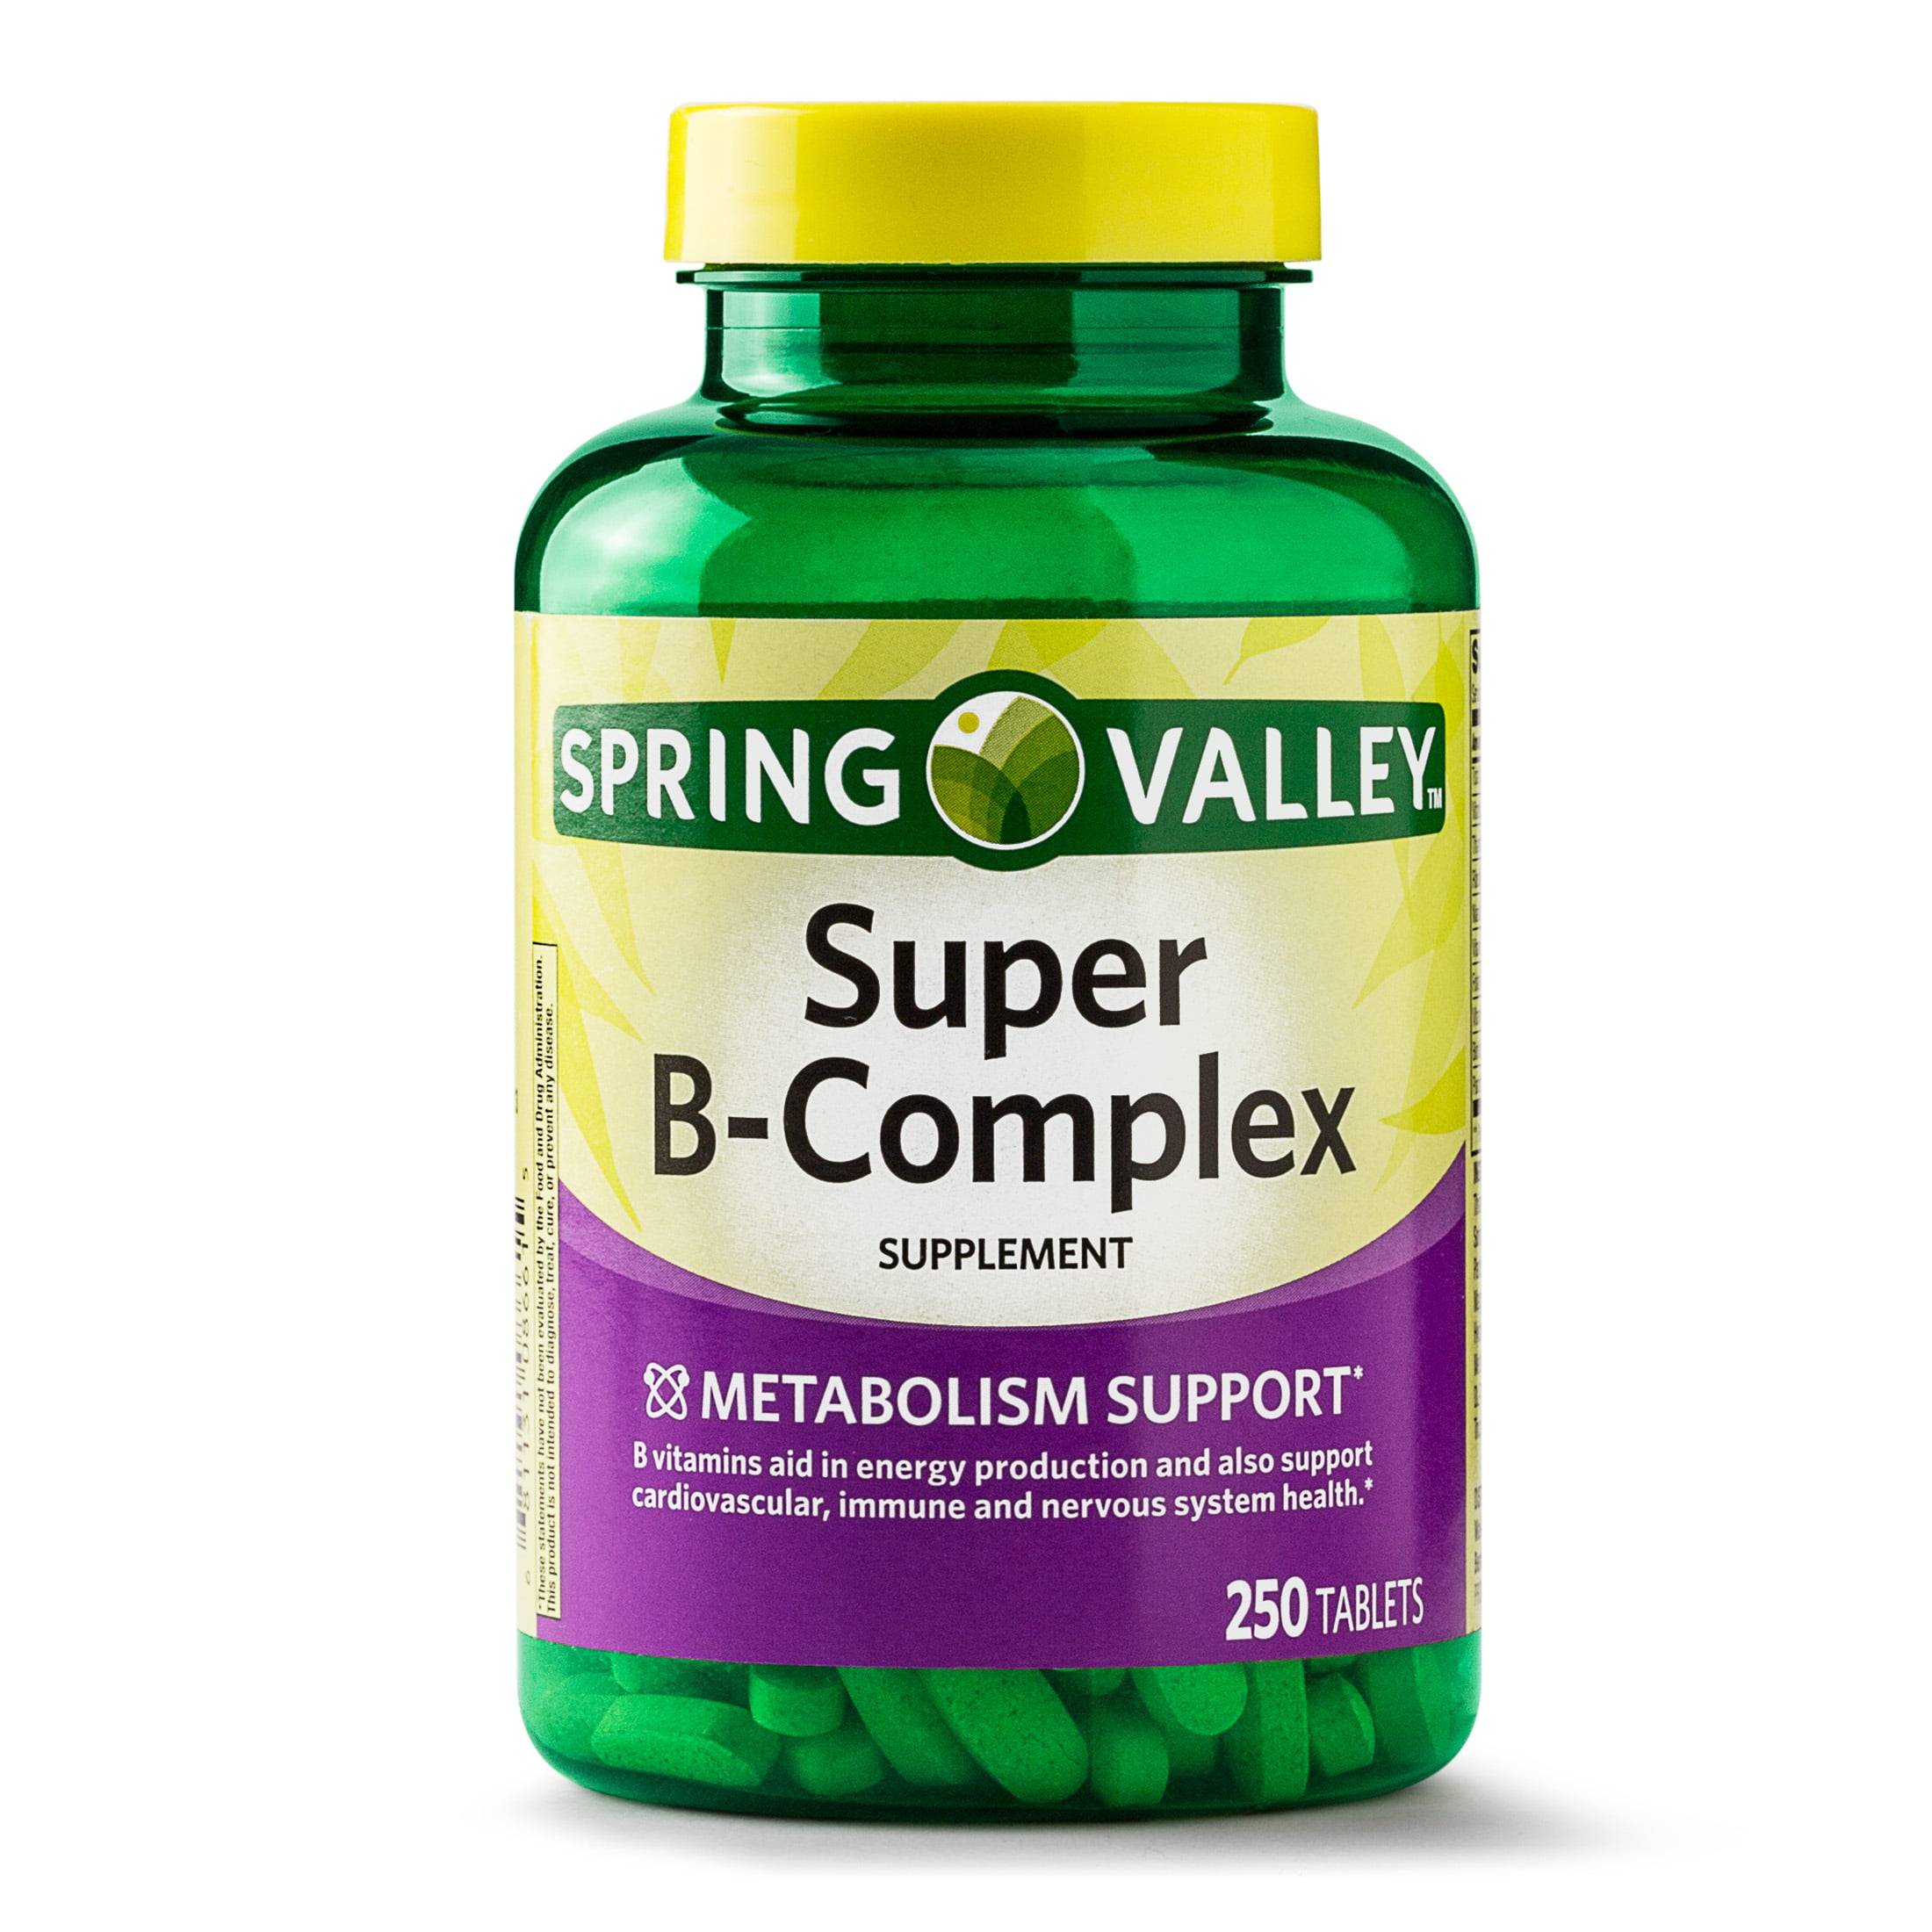 Super b complex